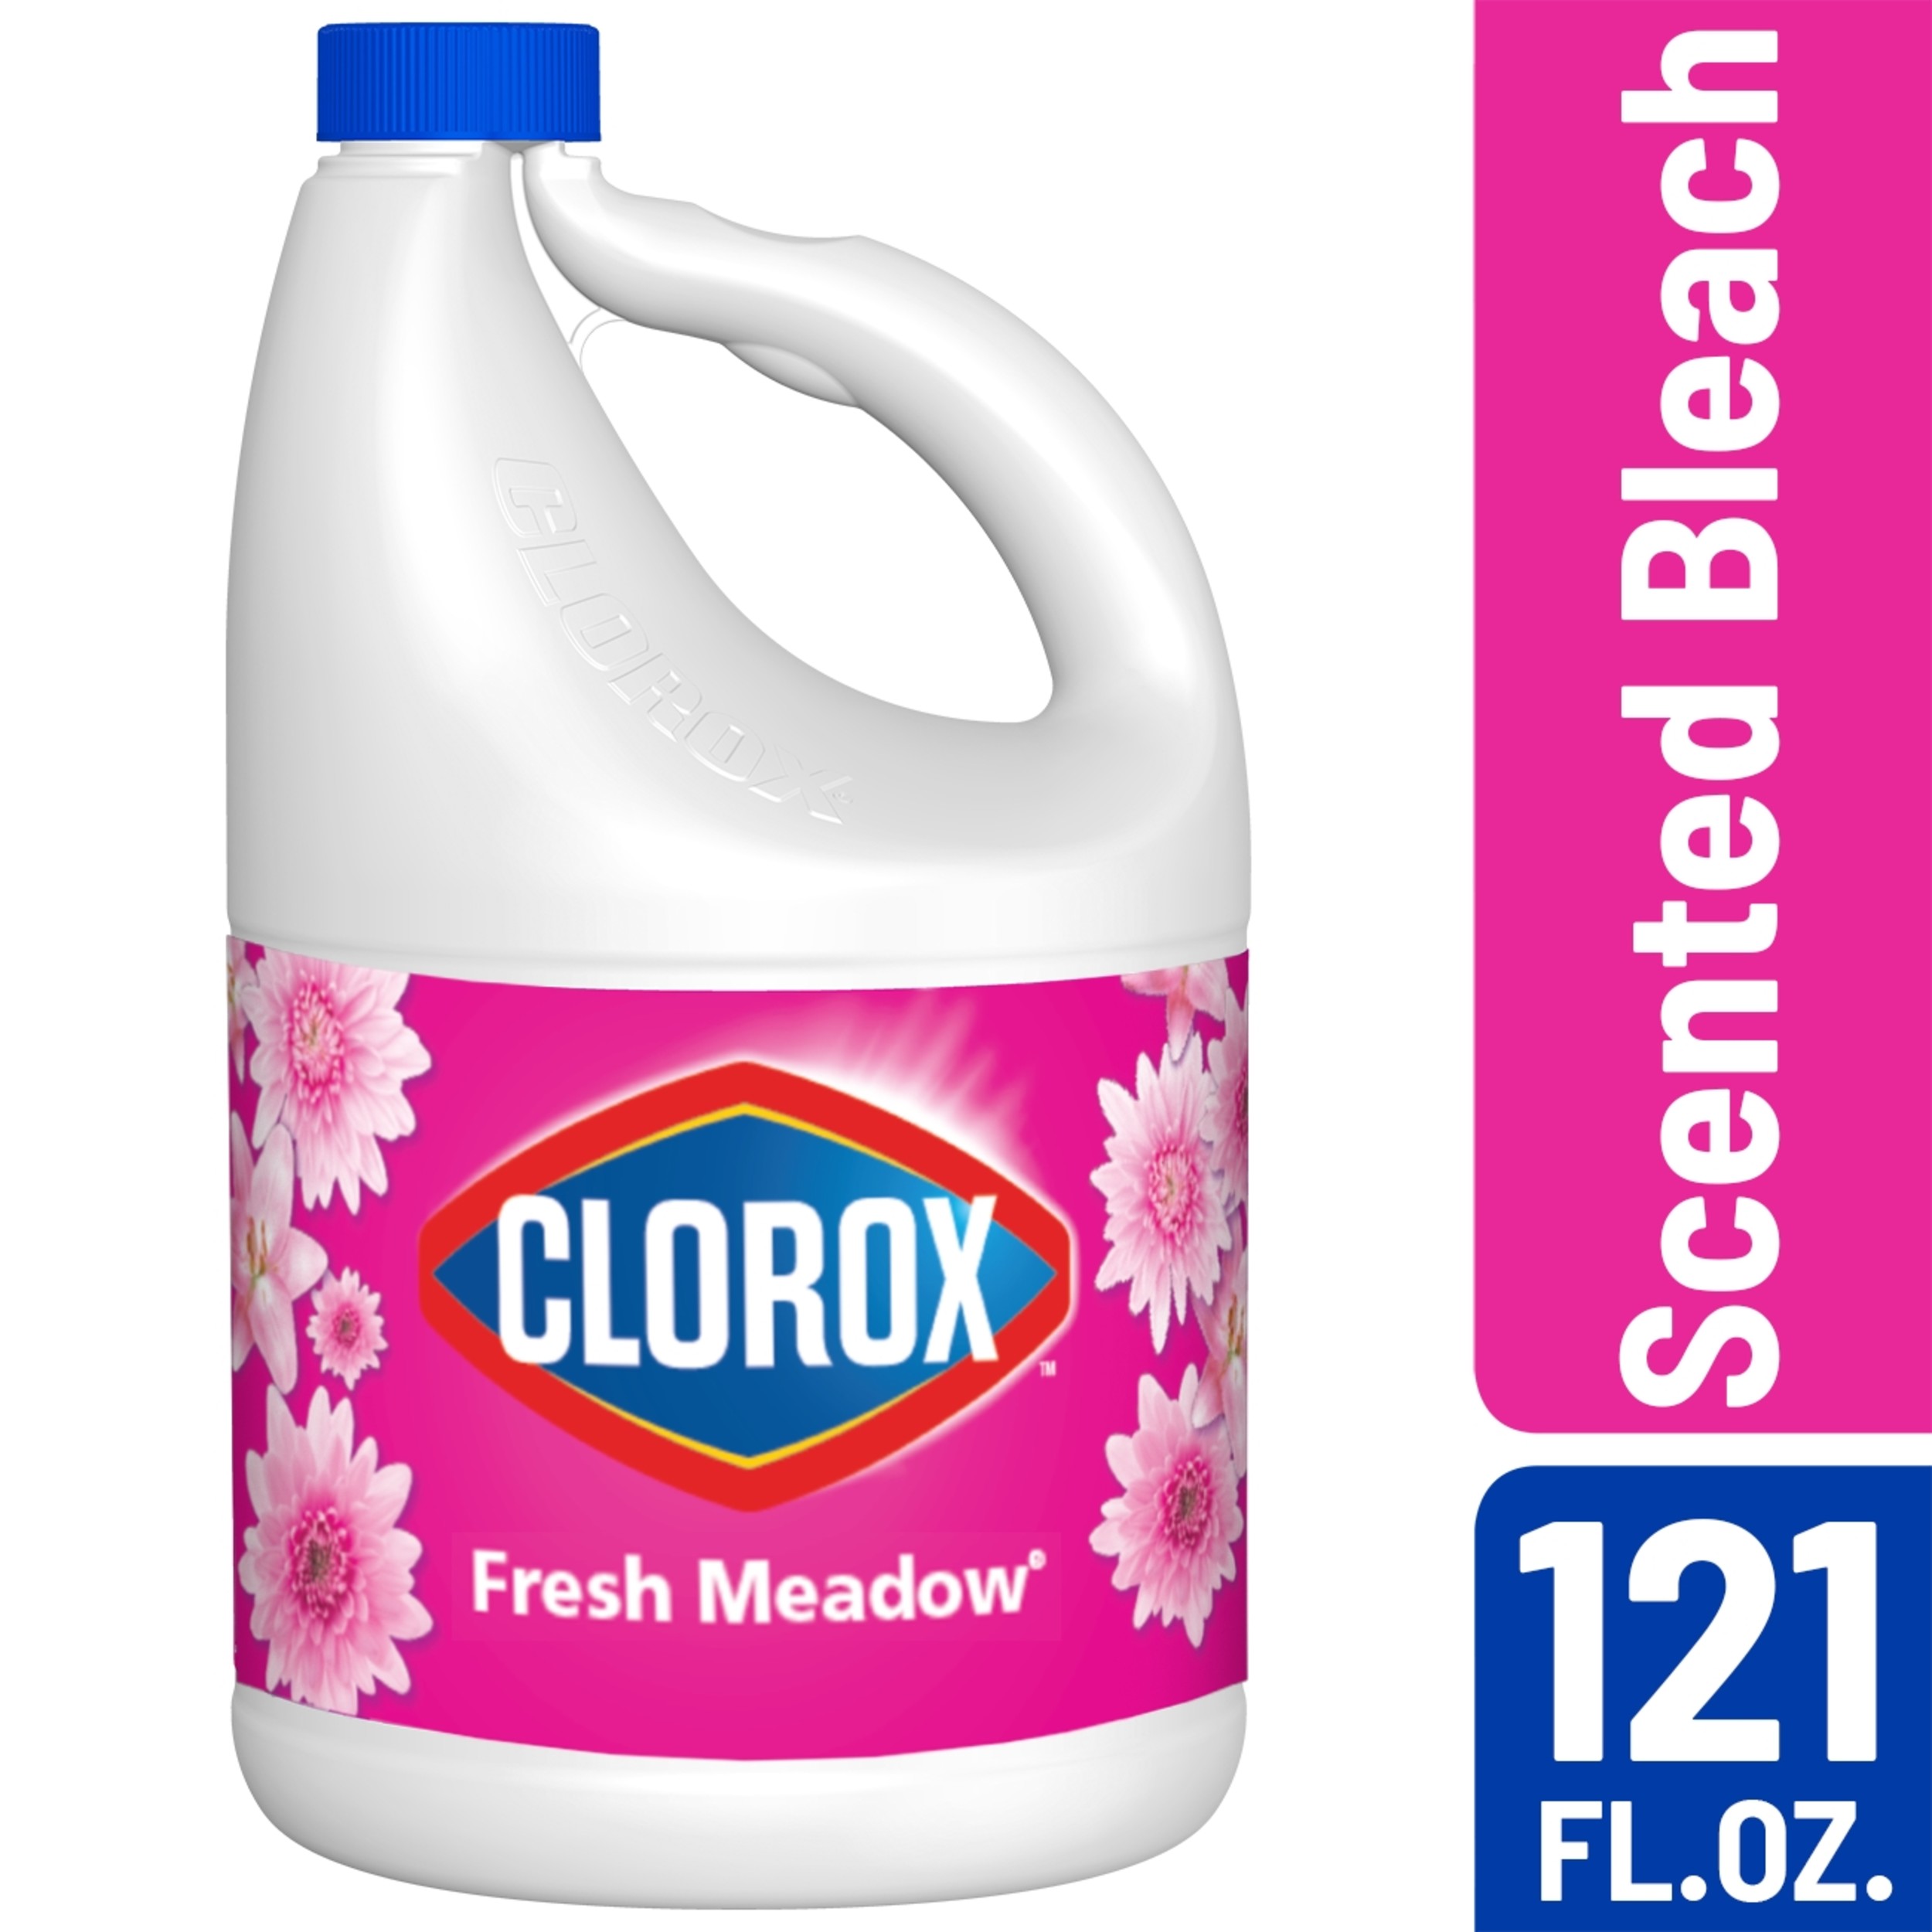 Clorox Liquid Bleach, Fresh Meadow Scent, 121 oz Bottle - image 1 of 11